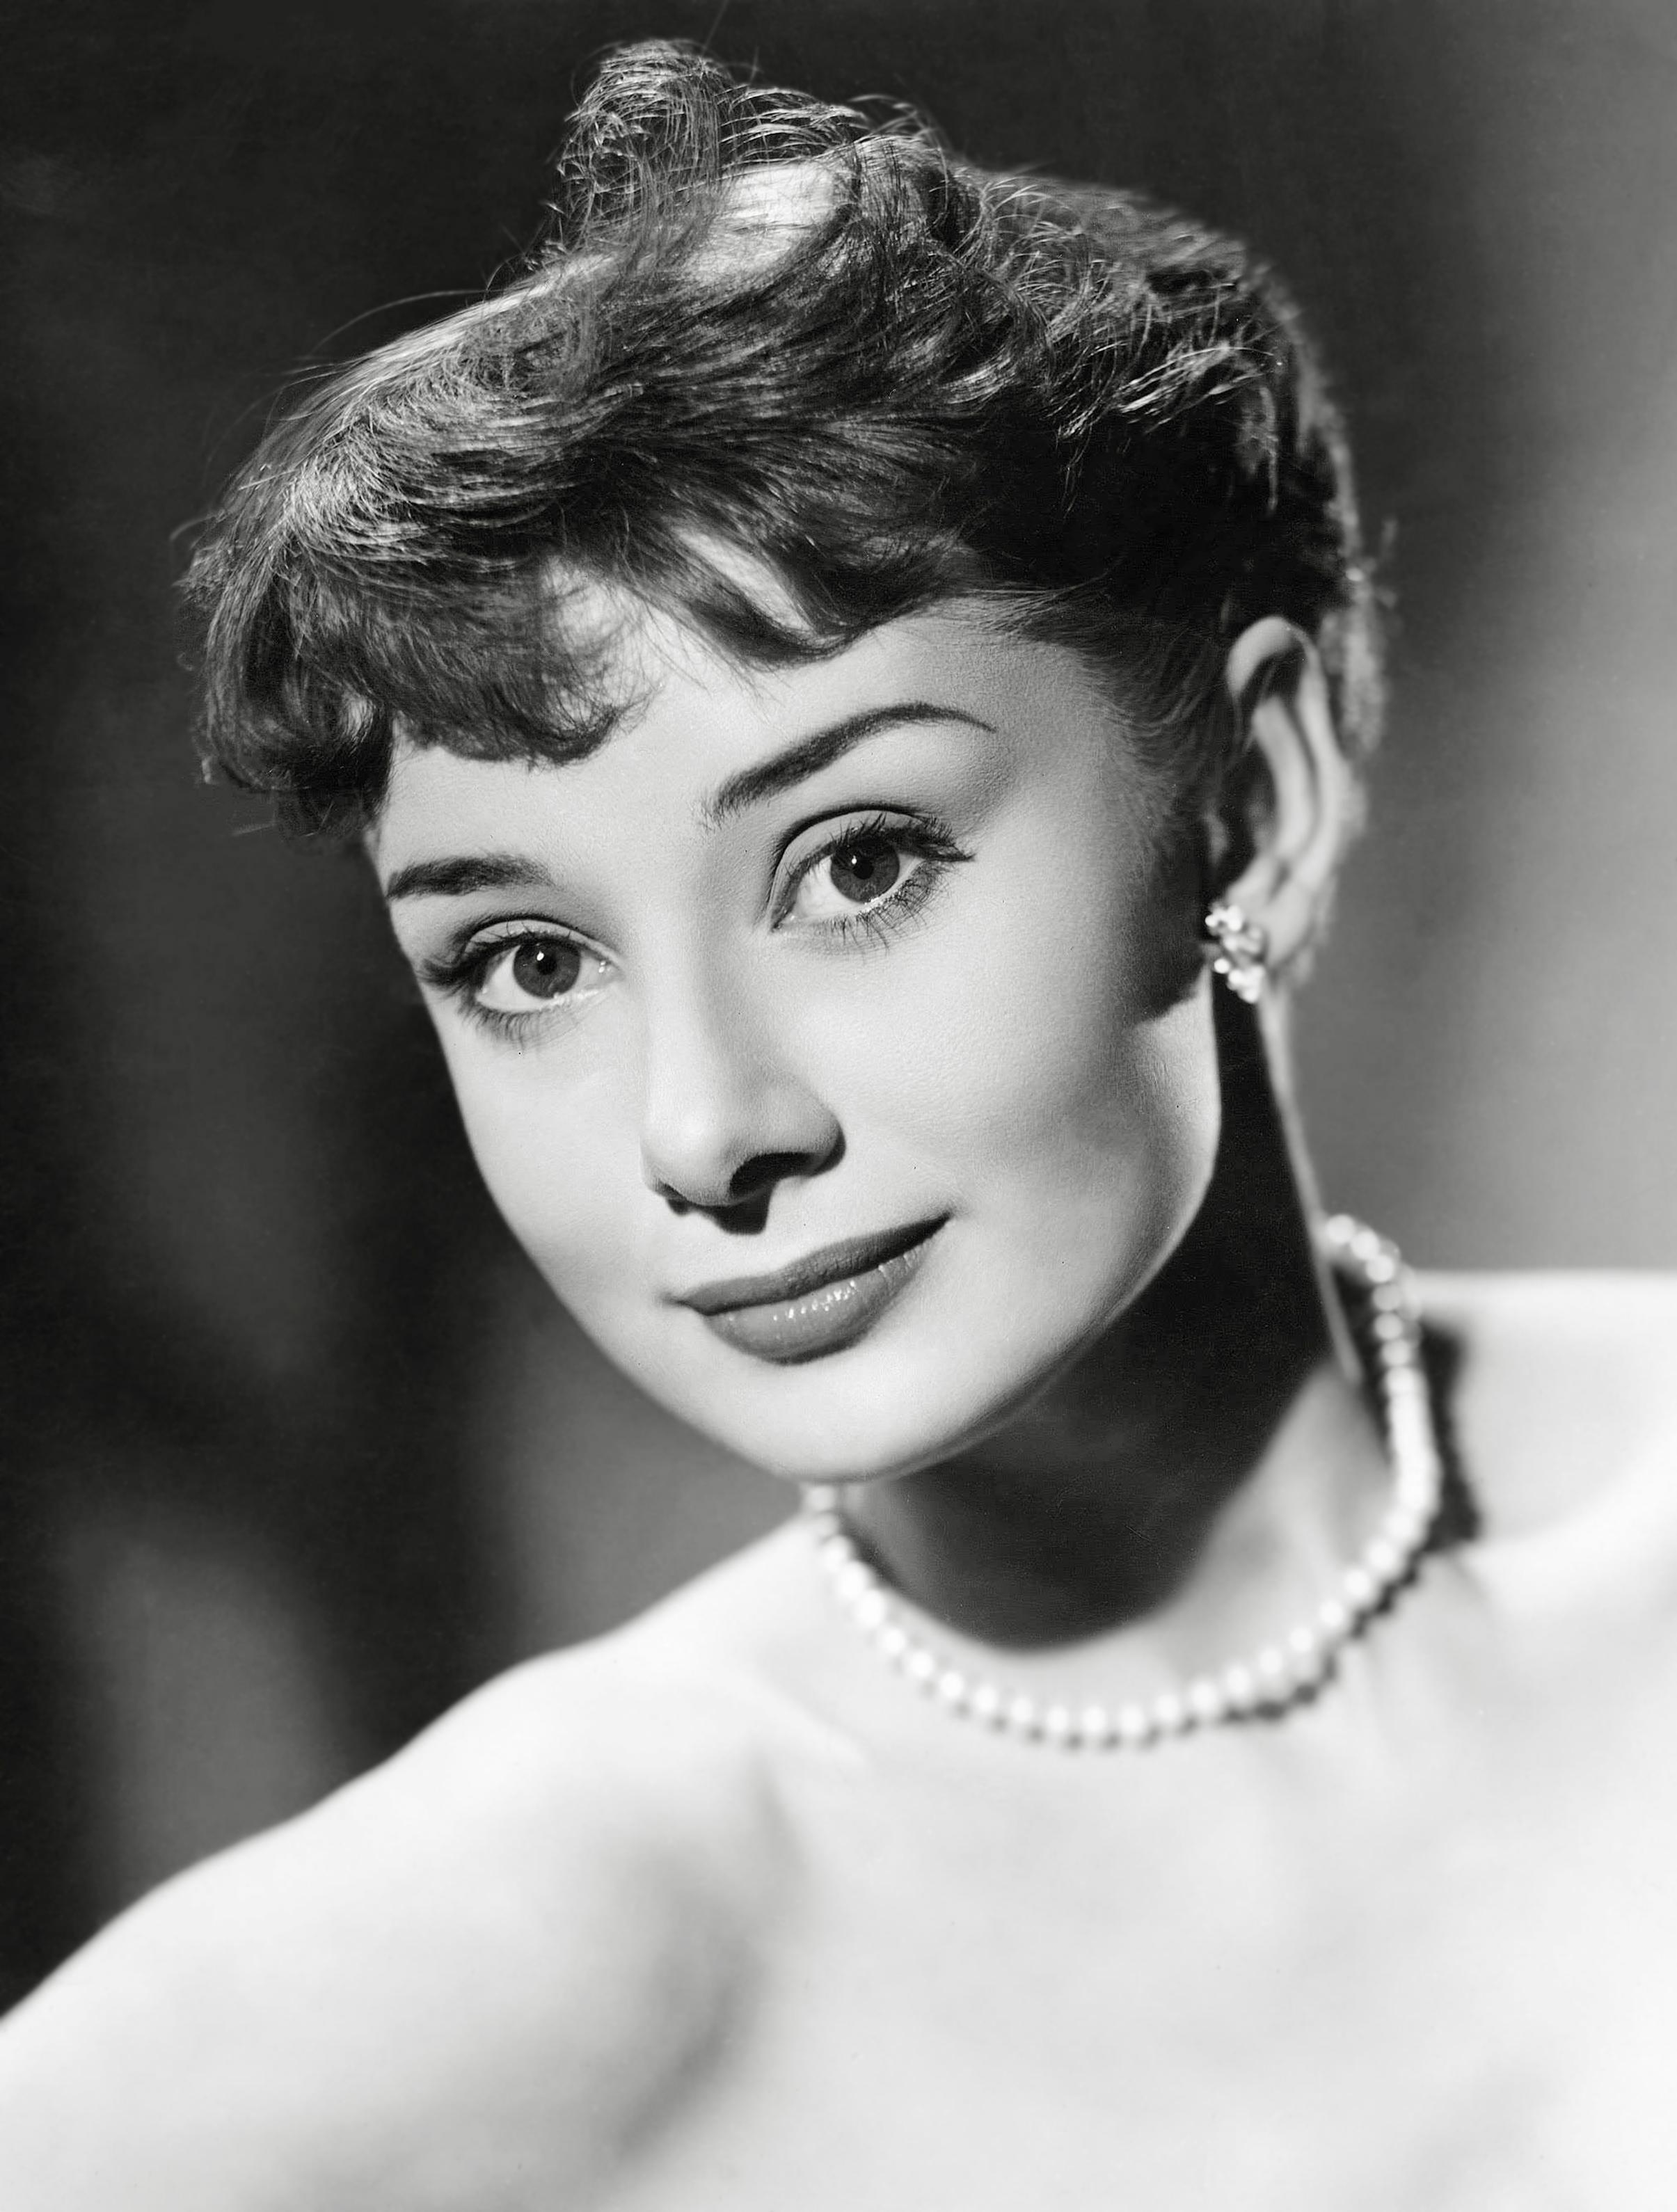 Unknown Portrait Photograph - Audrey Hepburn Smiling in Pearls Globe Photos Fine Art Print